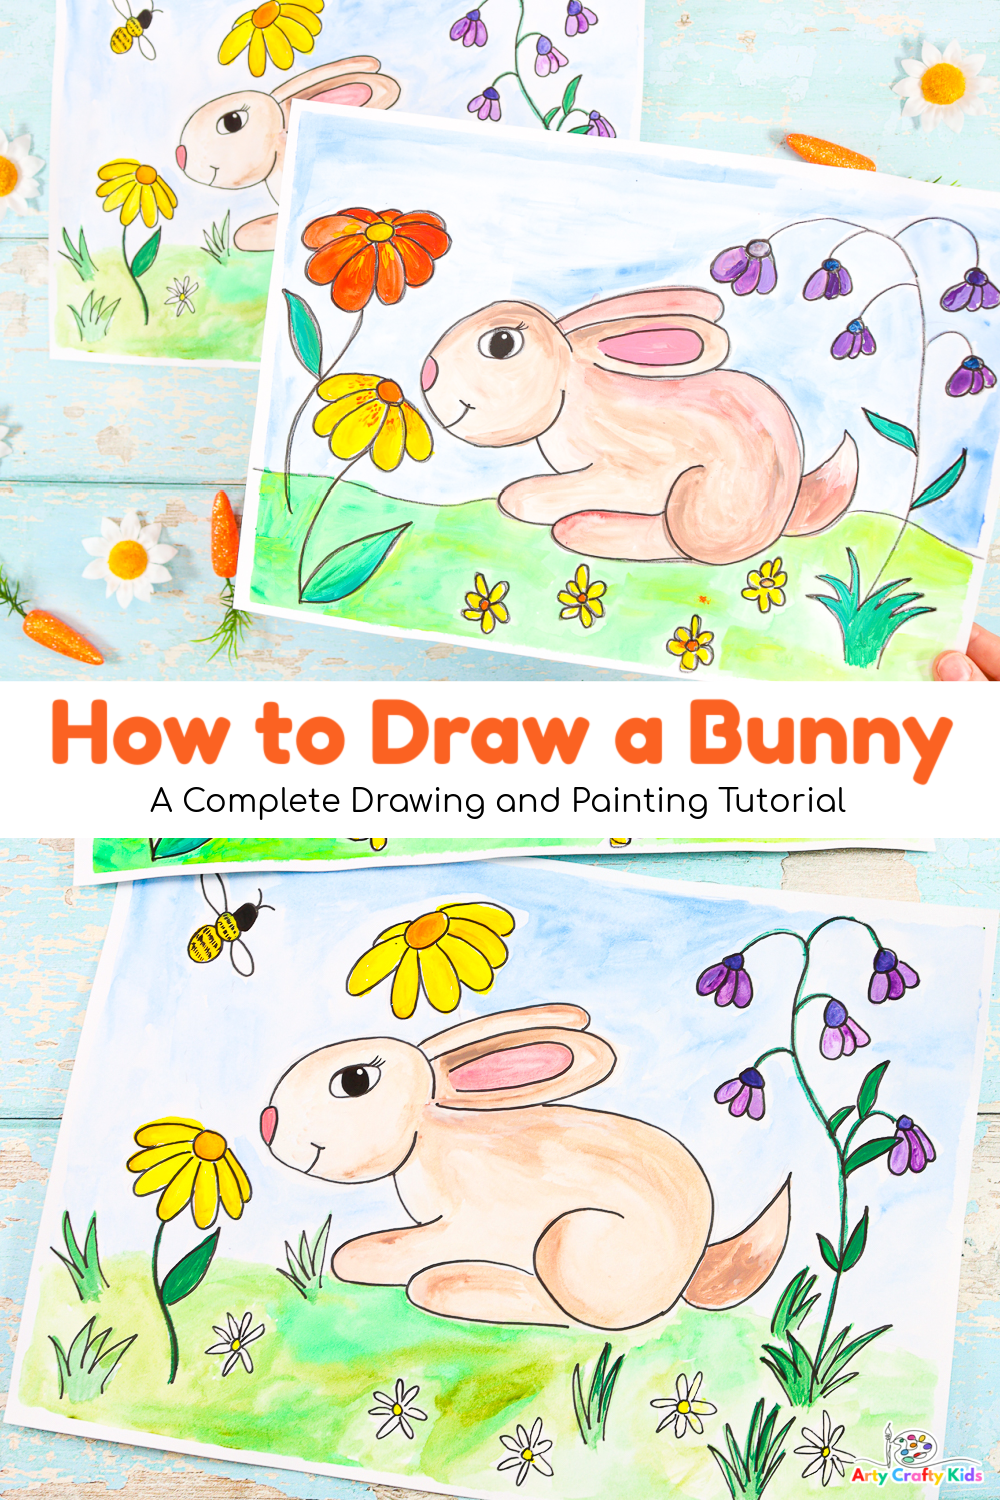 Draw a rabbit with pencils - Sabrina Hassler - Illustration & Drawing Blog